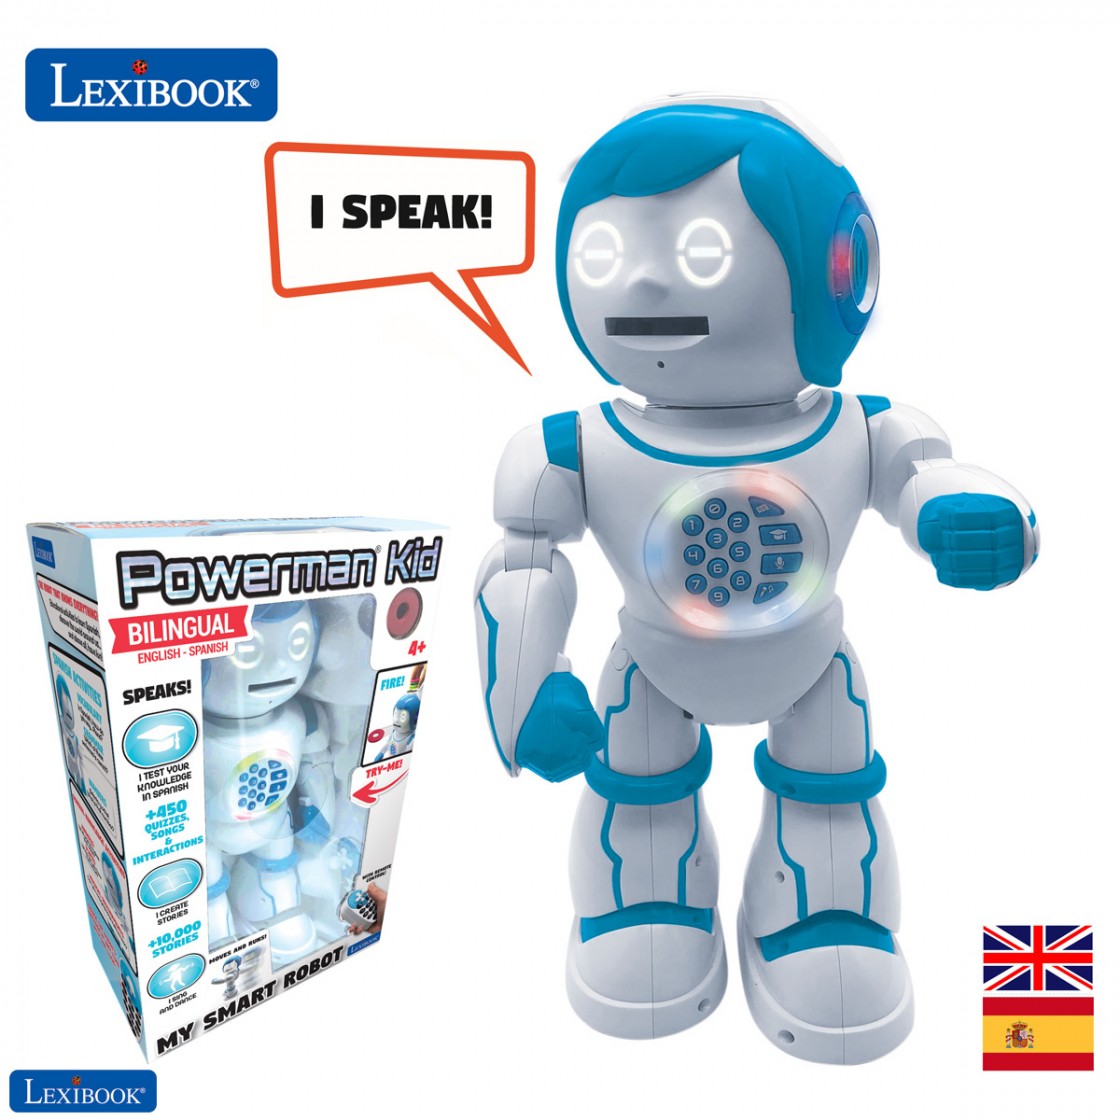 Lexibook Powerman Jr. Stem Robot